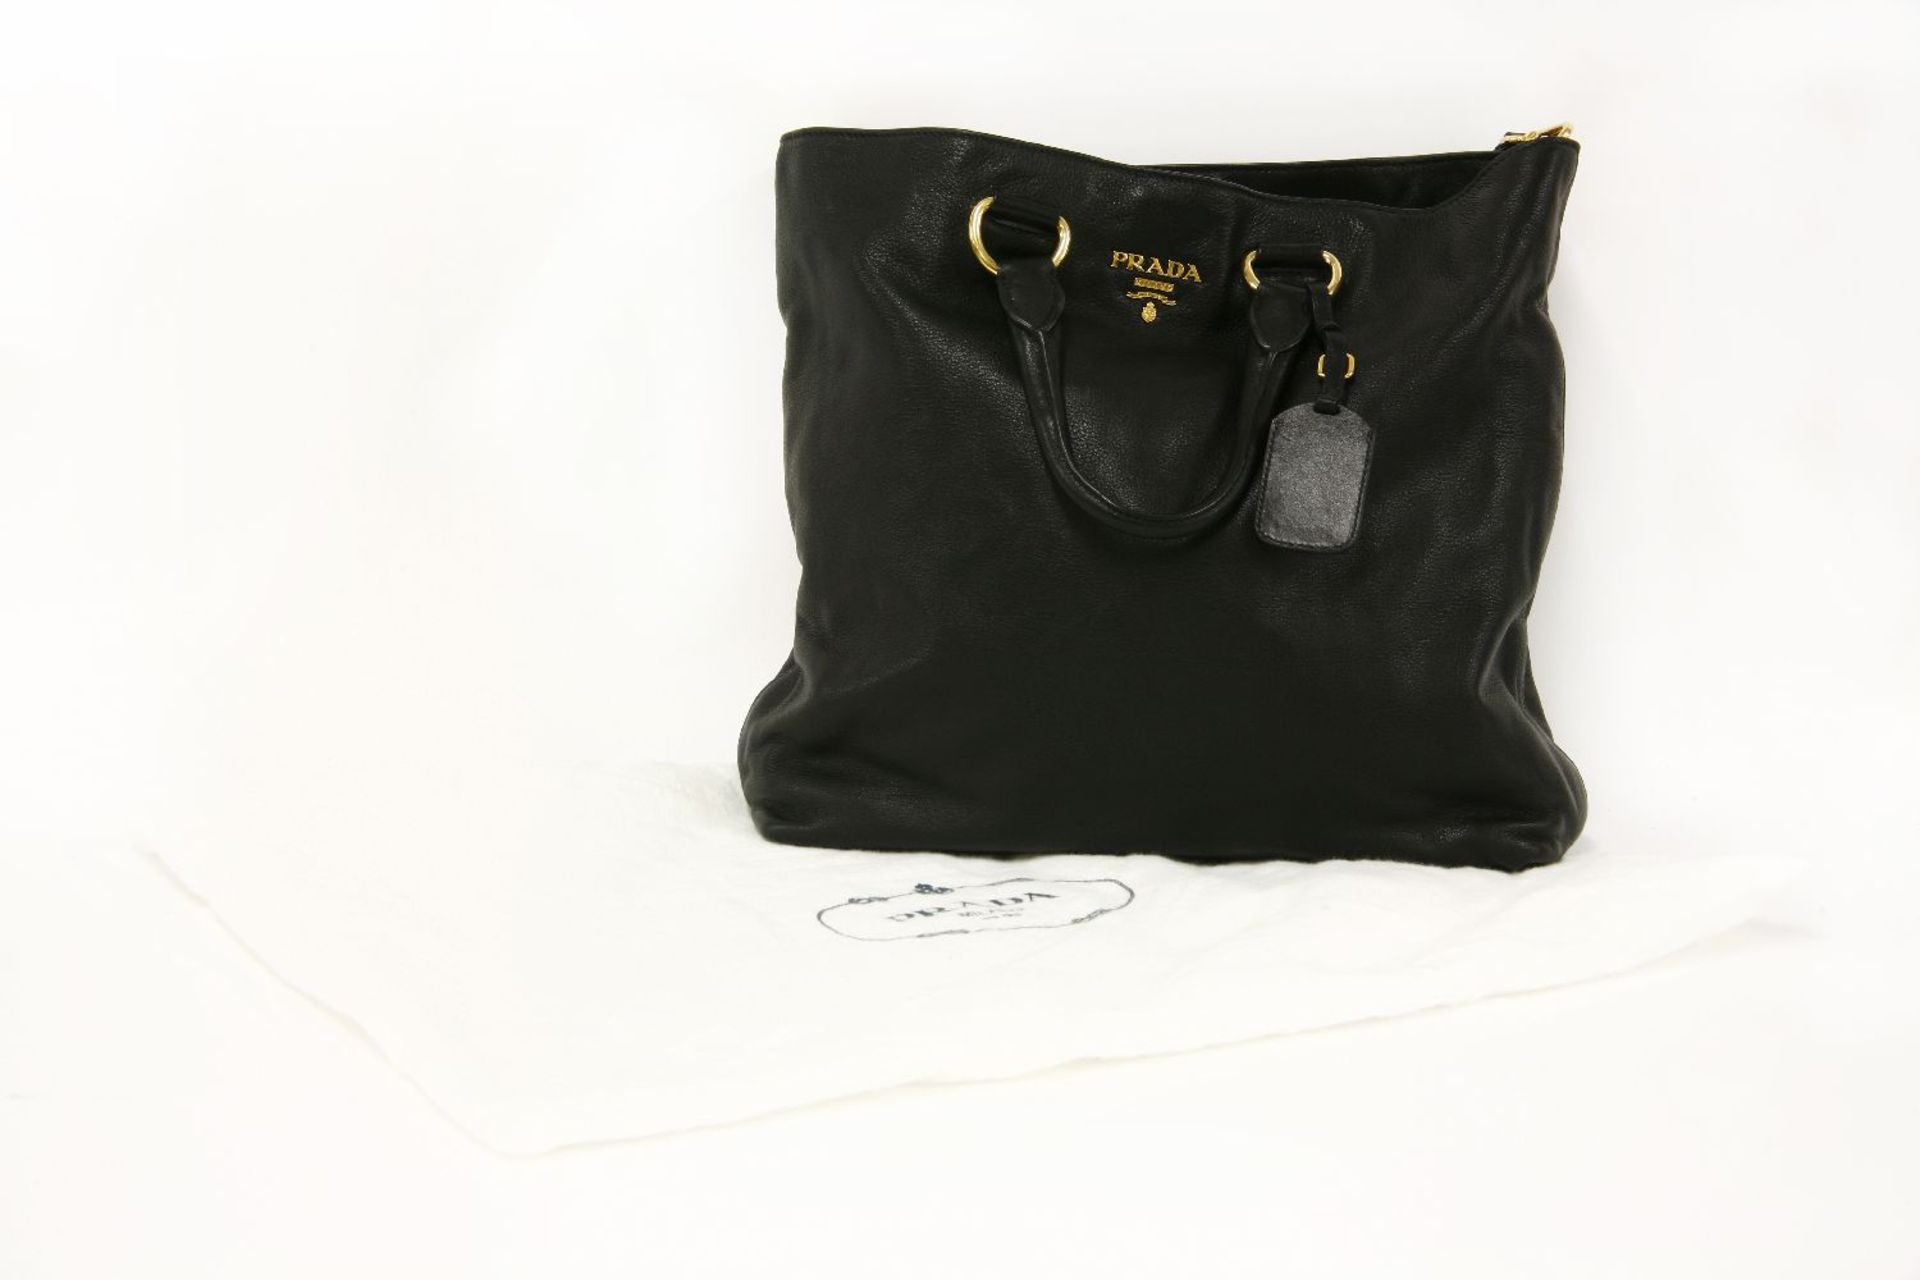 A Prada black leather handbag,featuring a black pebbled leather exterior, gold-tone hardware - Image 2 of 2